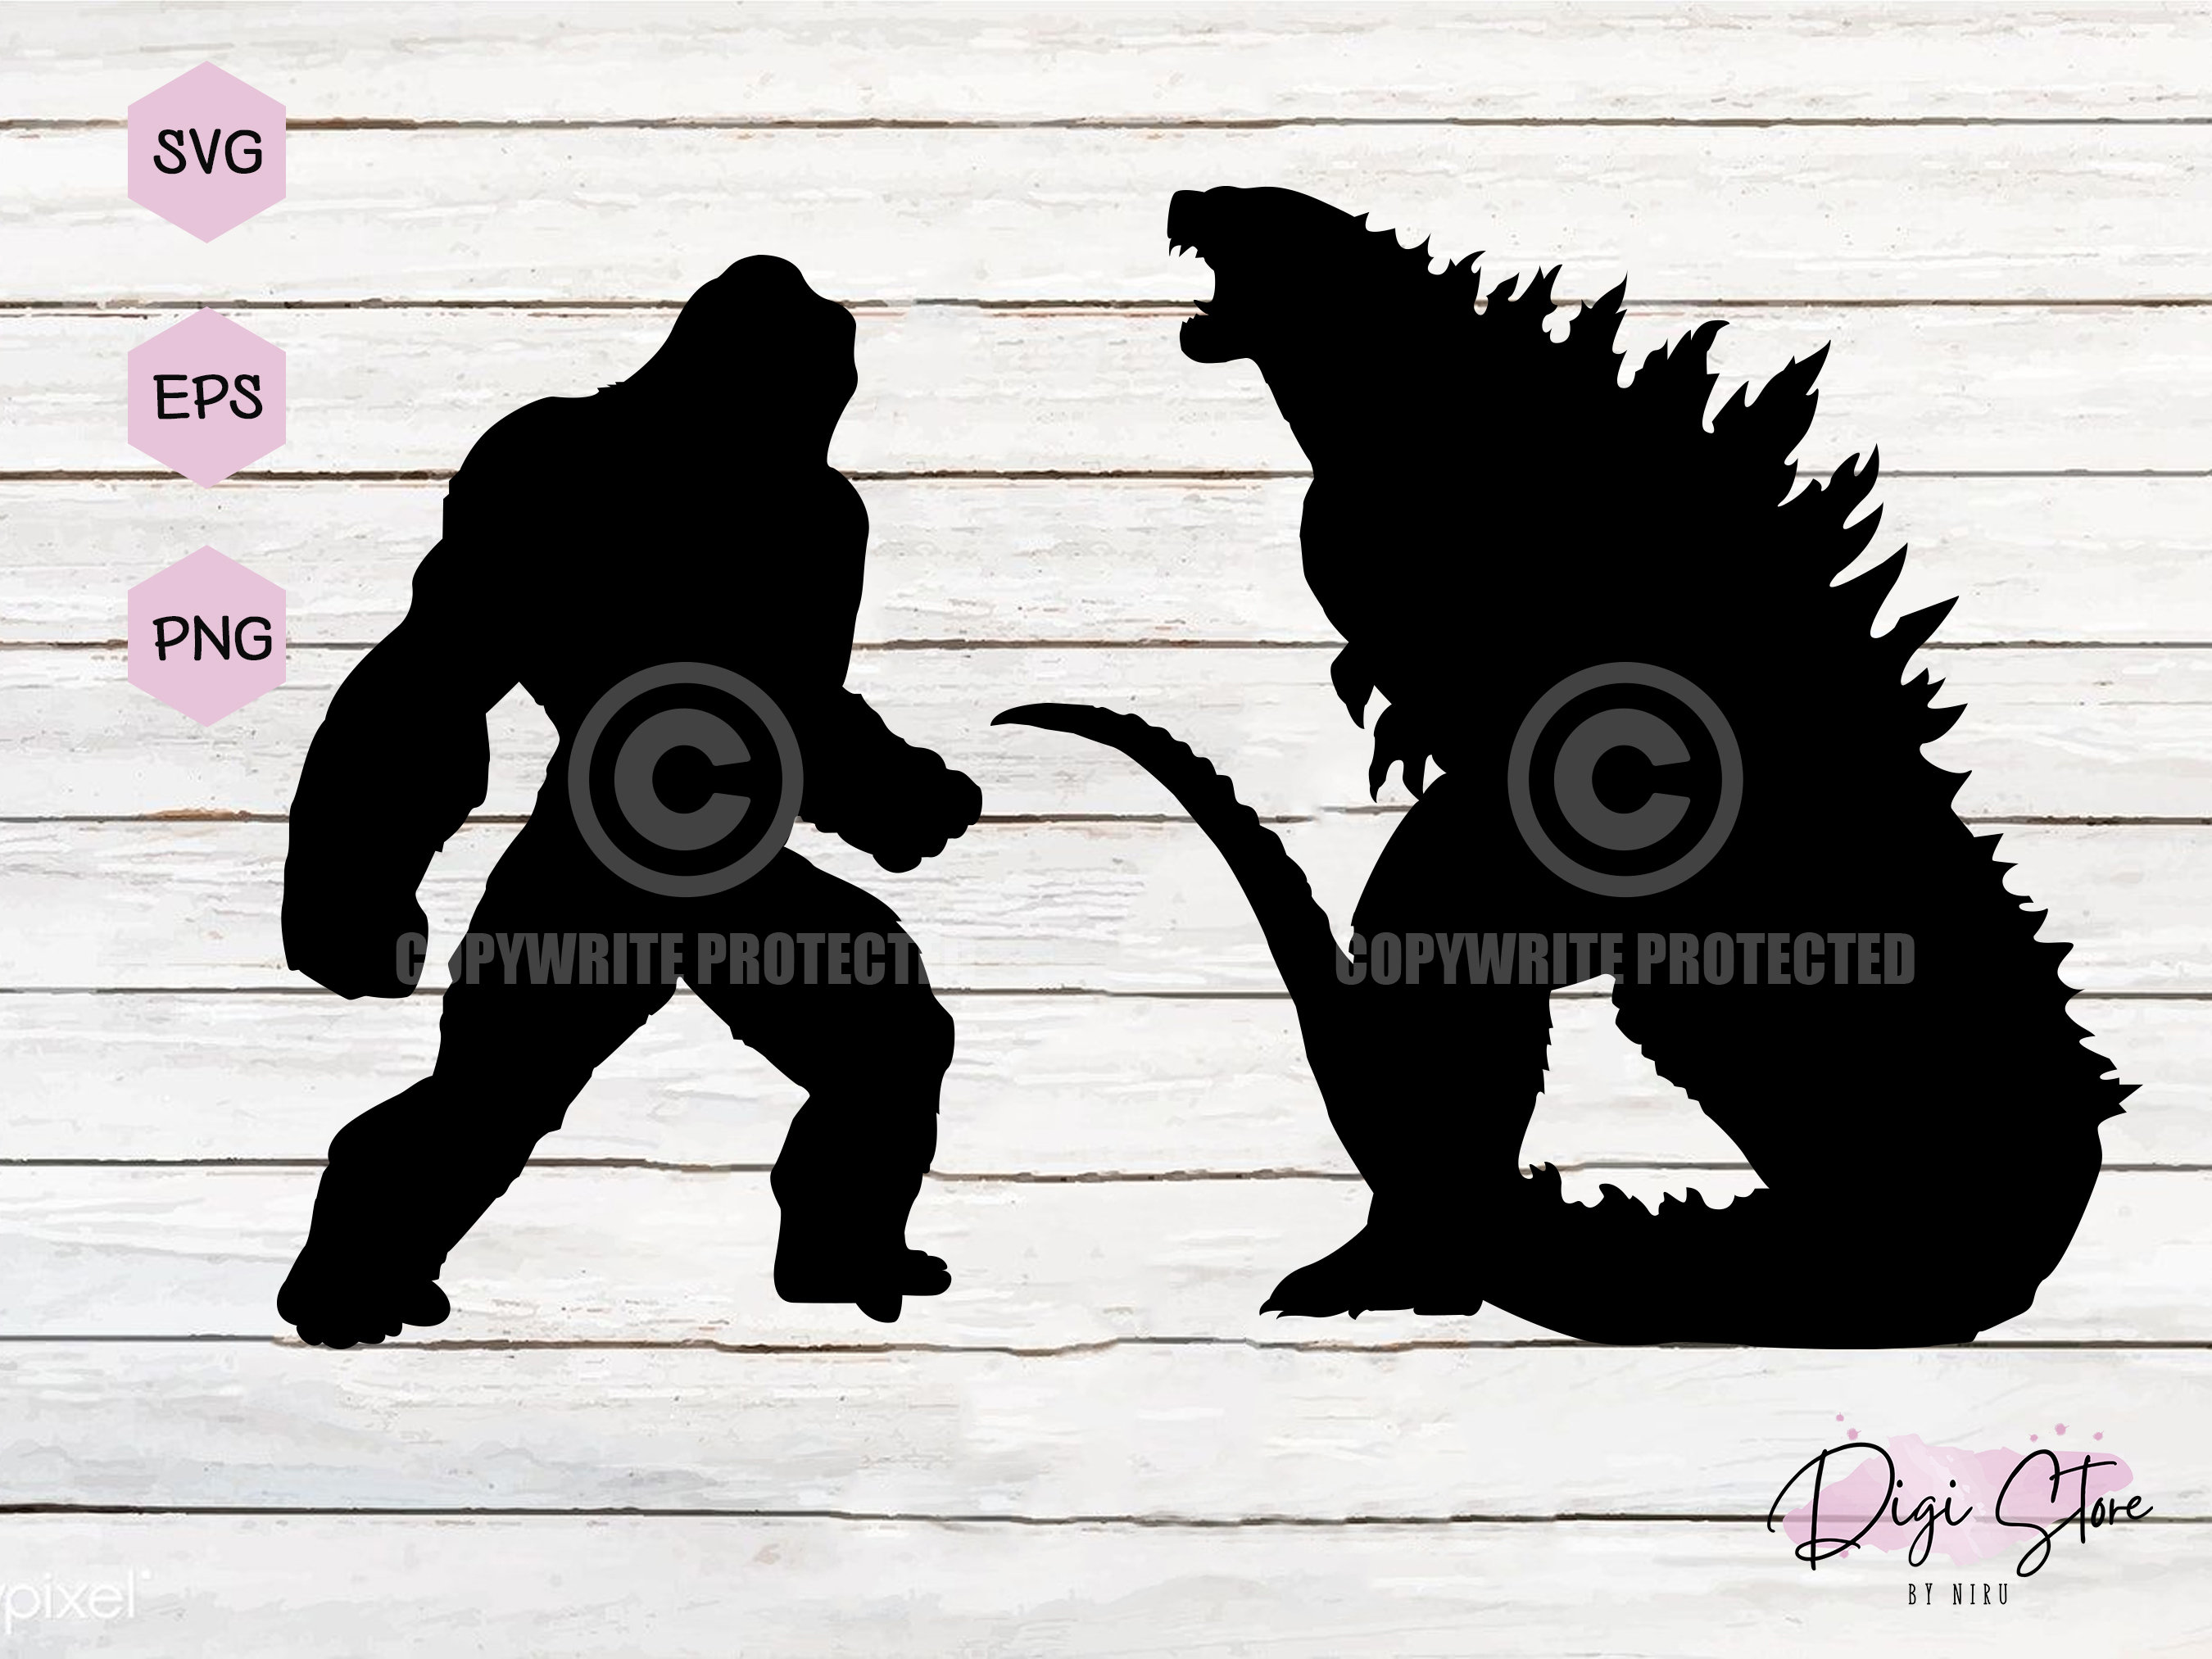 File:Chinese Godzilla vs. Kong cup toppers2.jpg